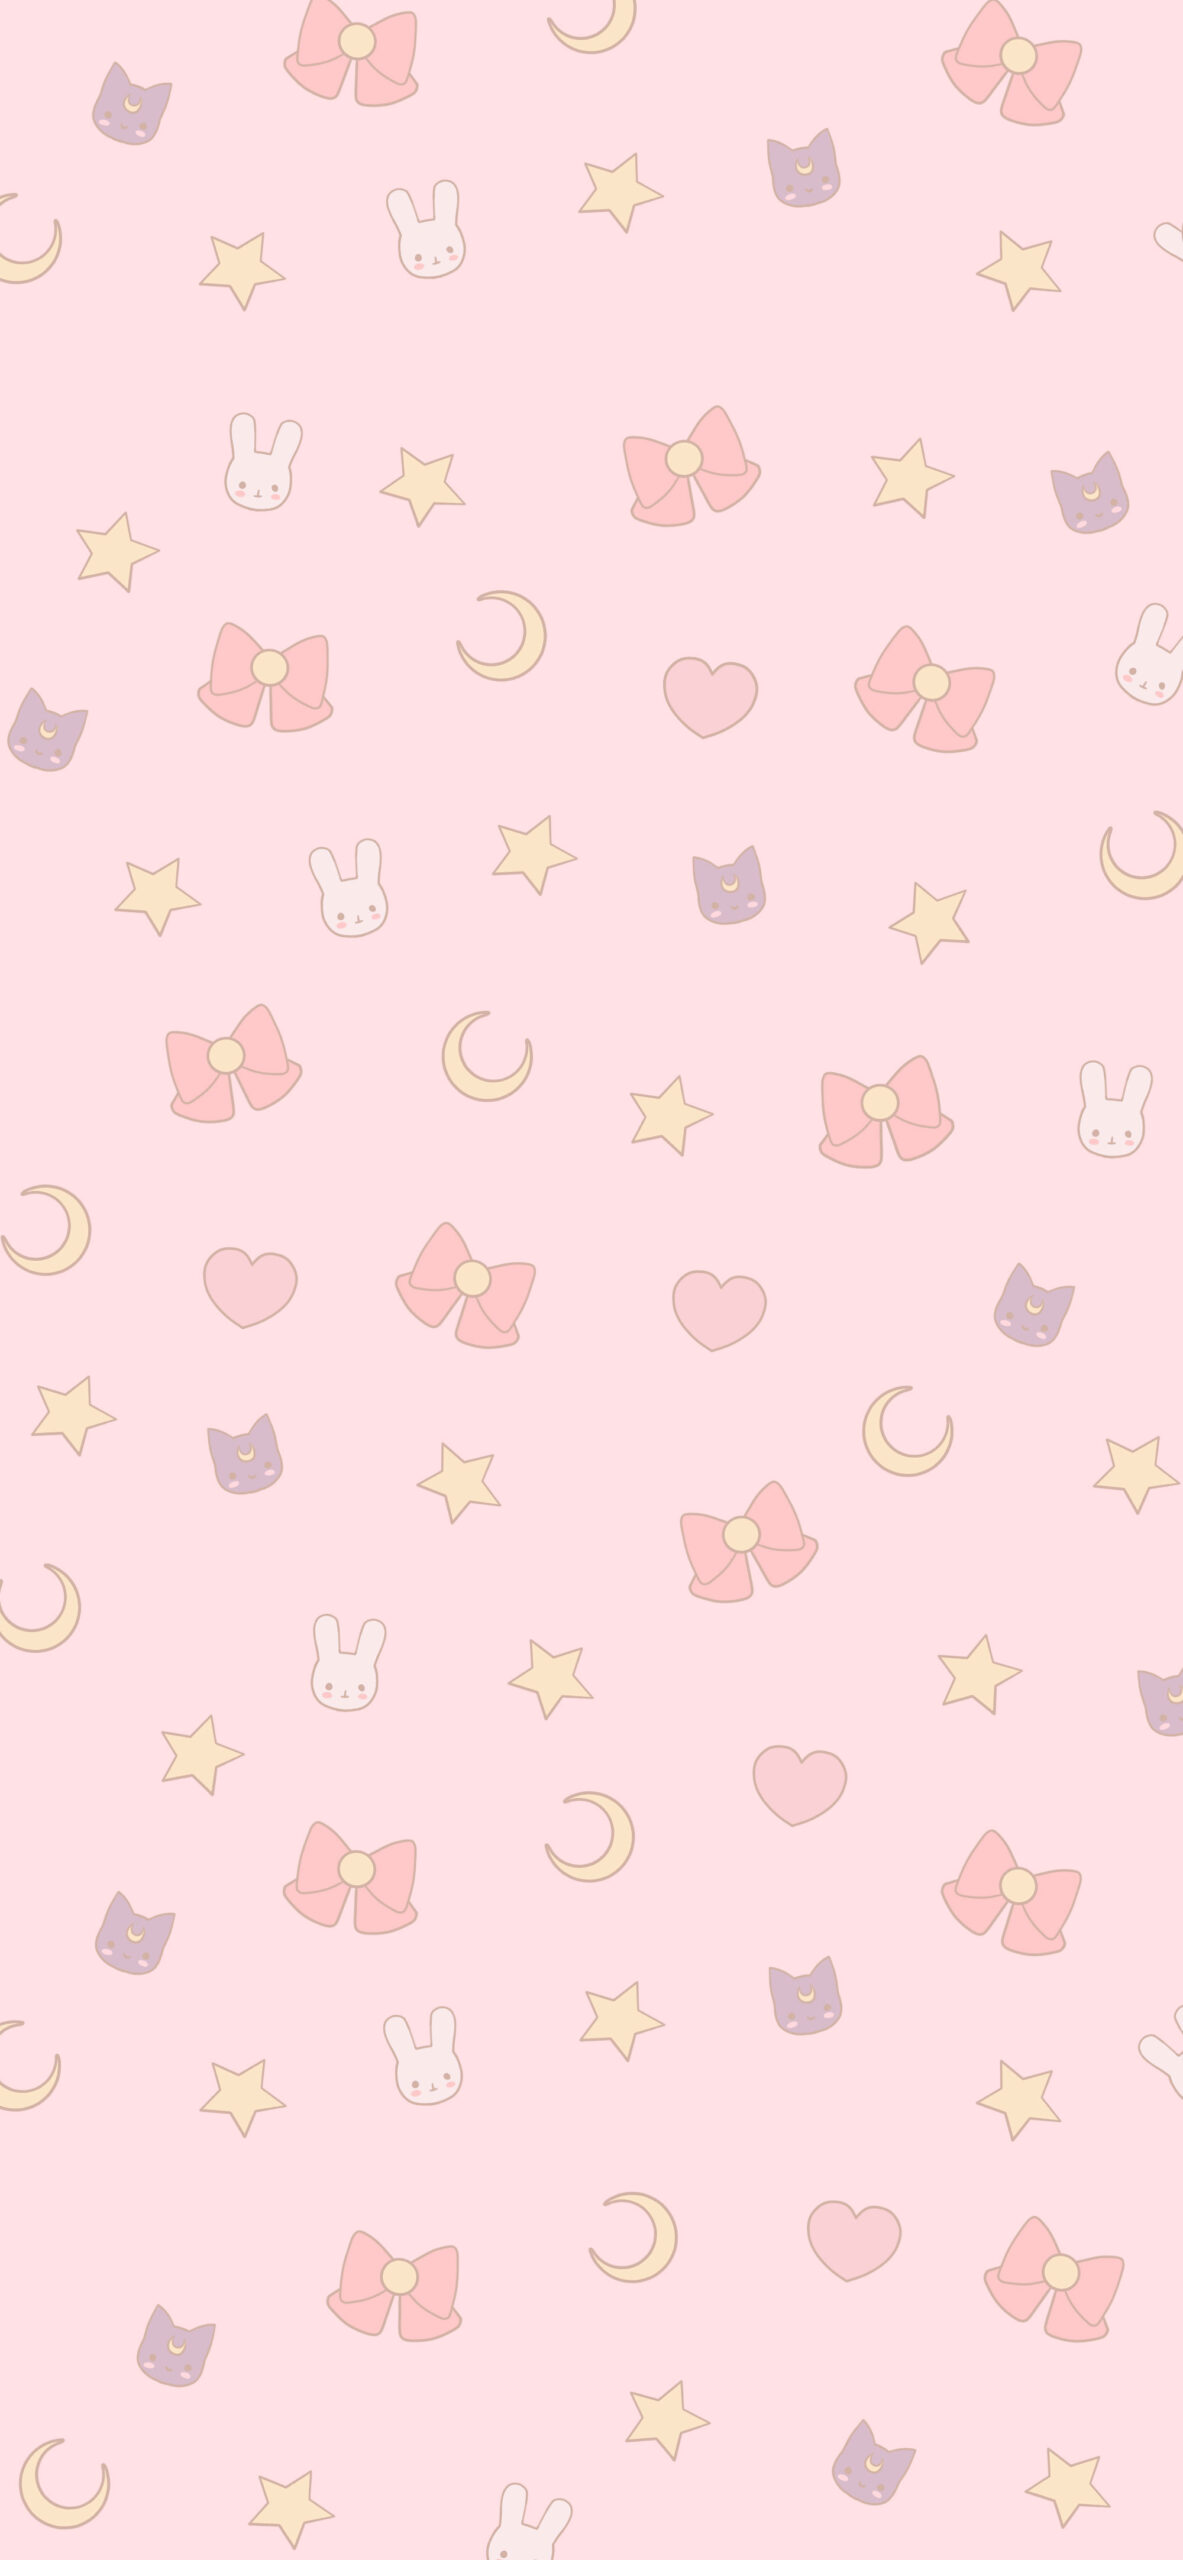 sailor moon patter pink background